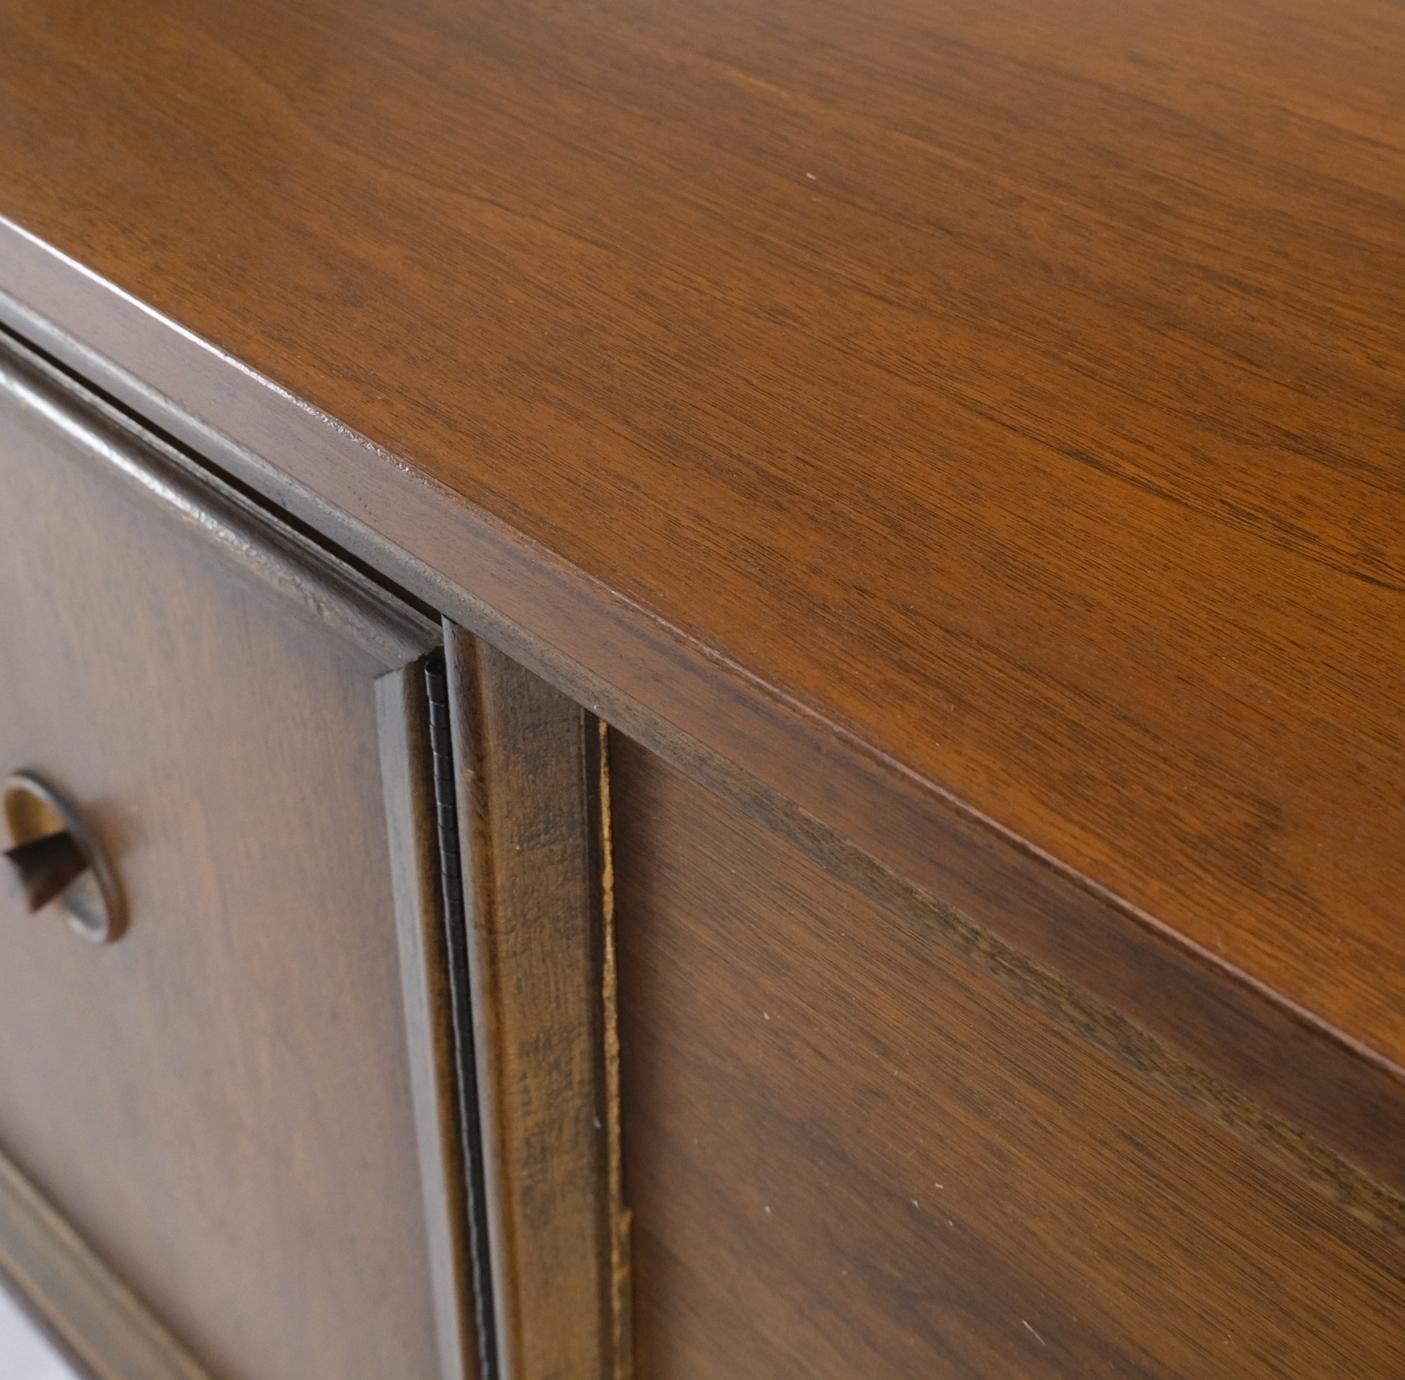 light wood 9 drawer dresser